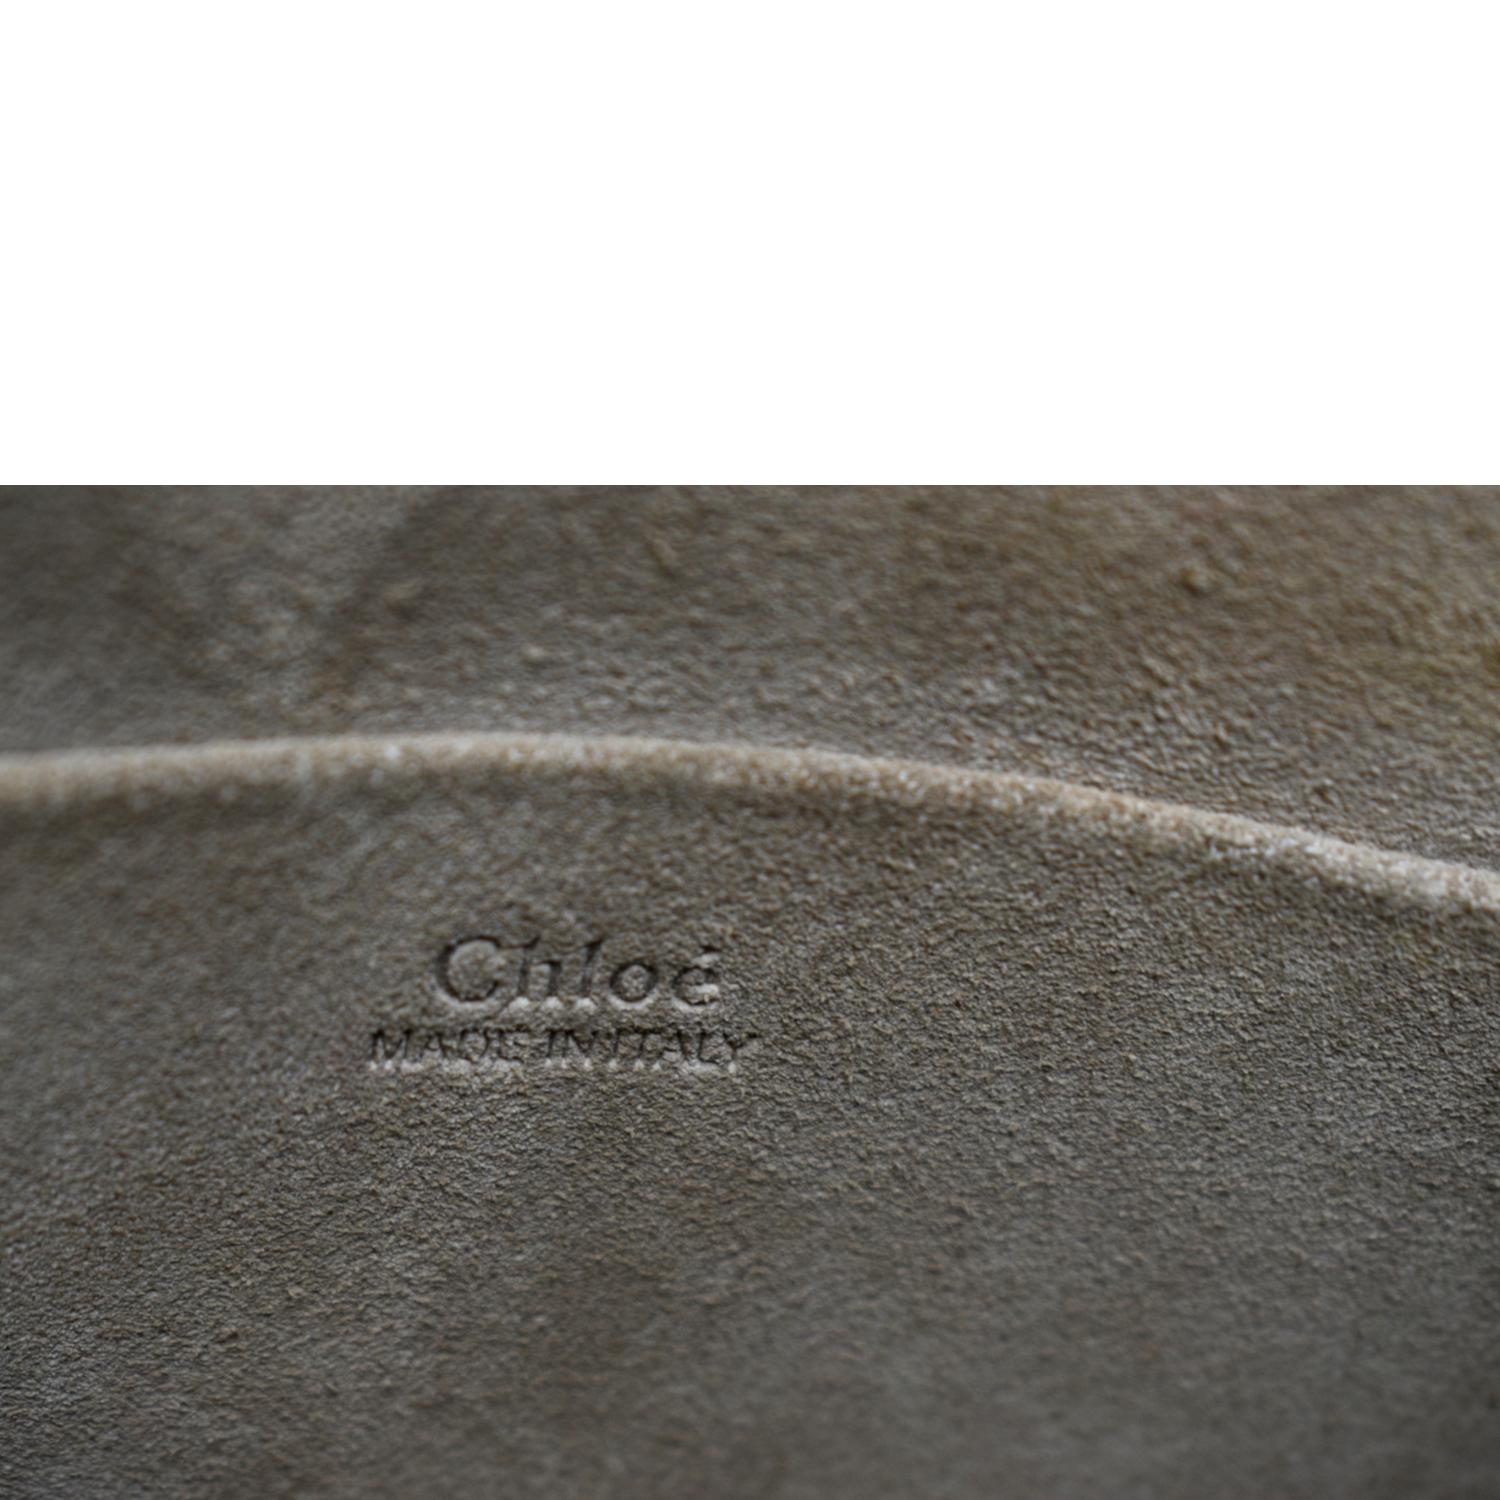 Chloe Khaki Grey Leather and Suede Medium Nile Bracelet Top Handle Bag Chloe